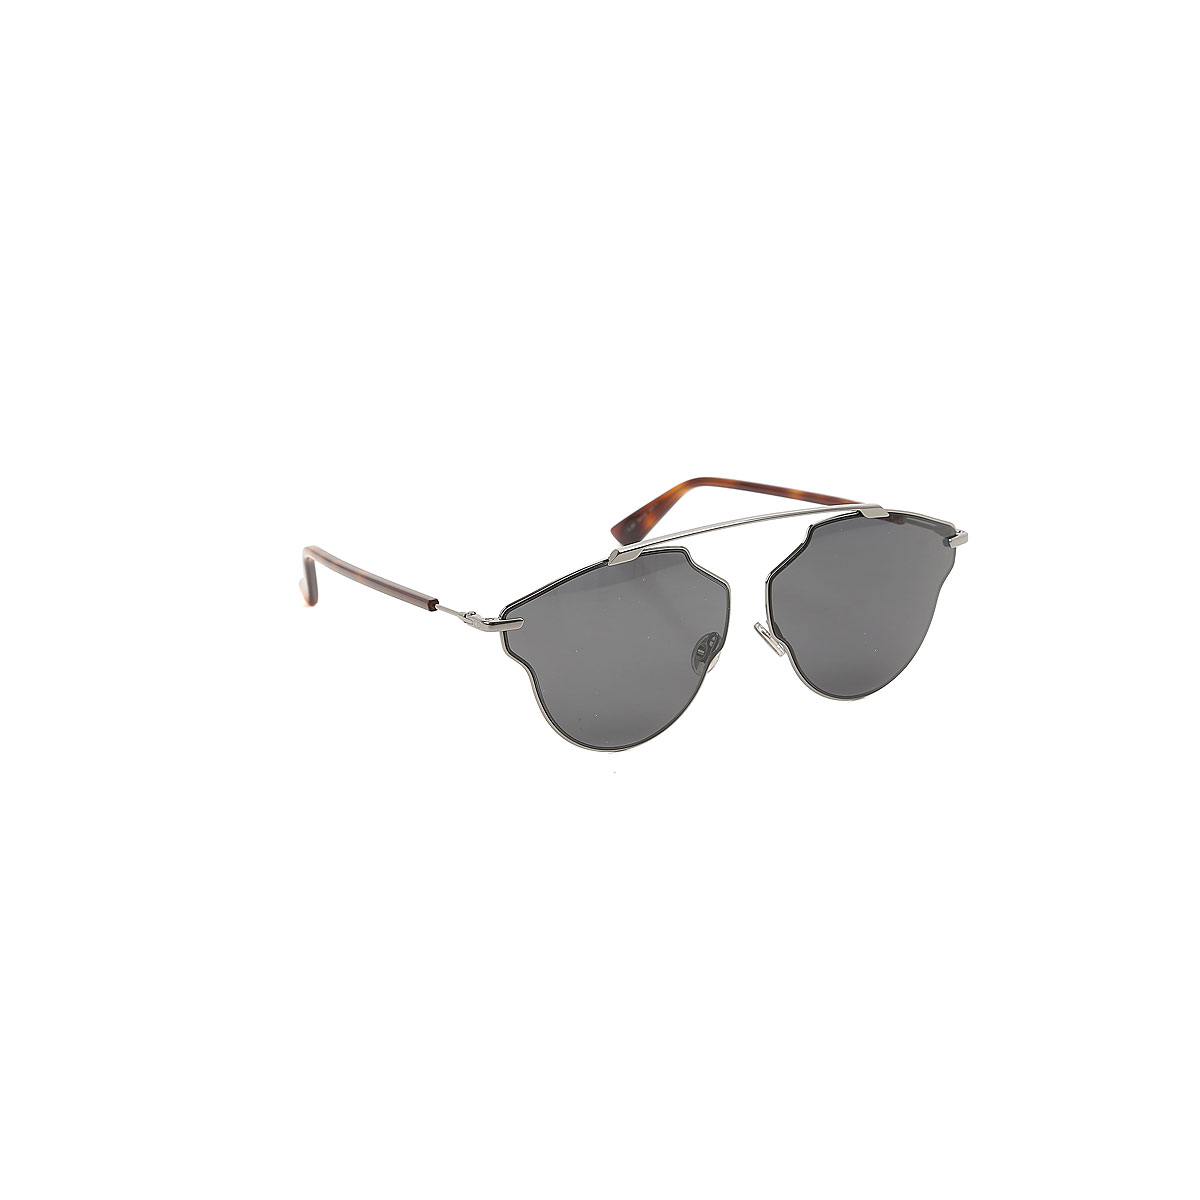 Sunglasses Christian Dior, Style code: diorsoreal-1tl-90